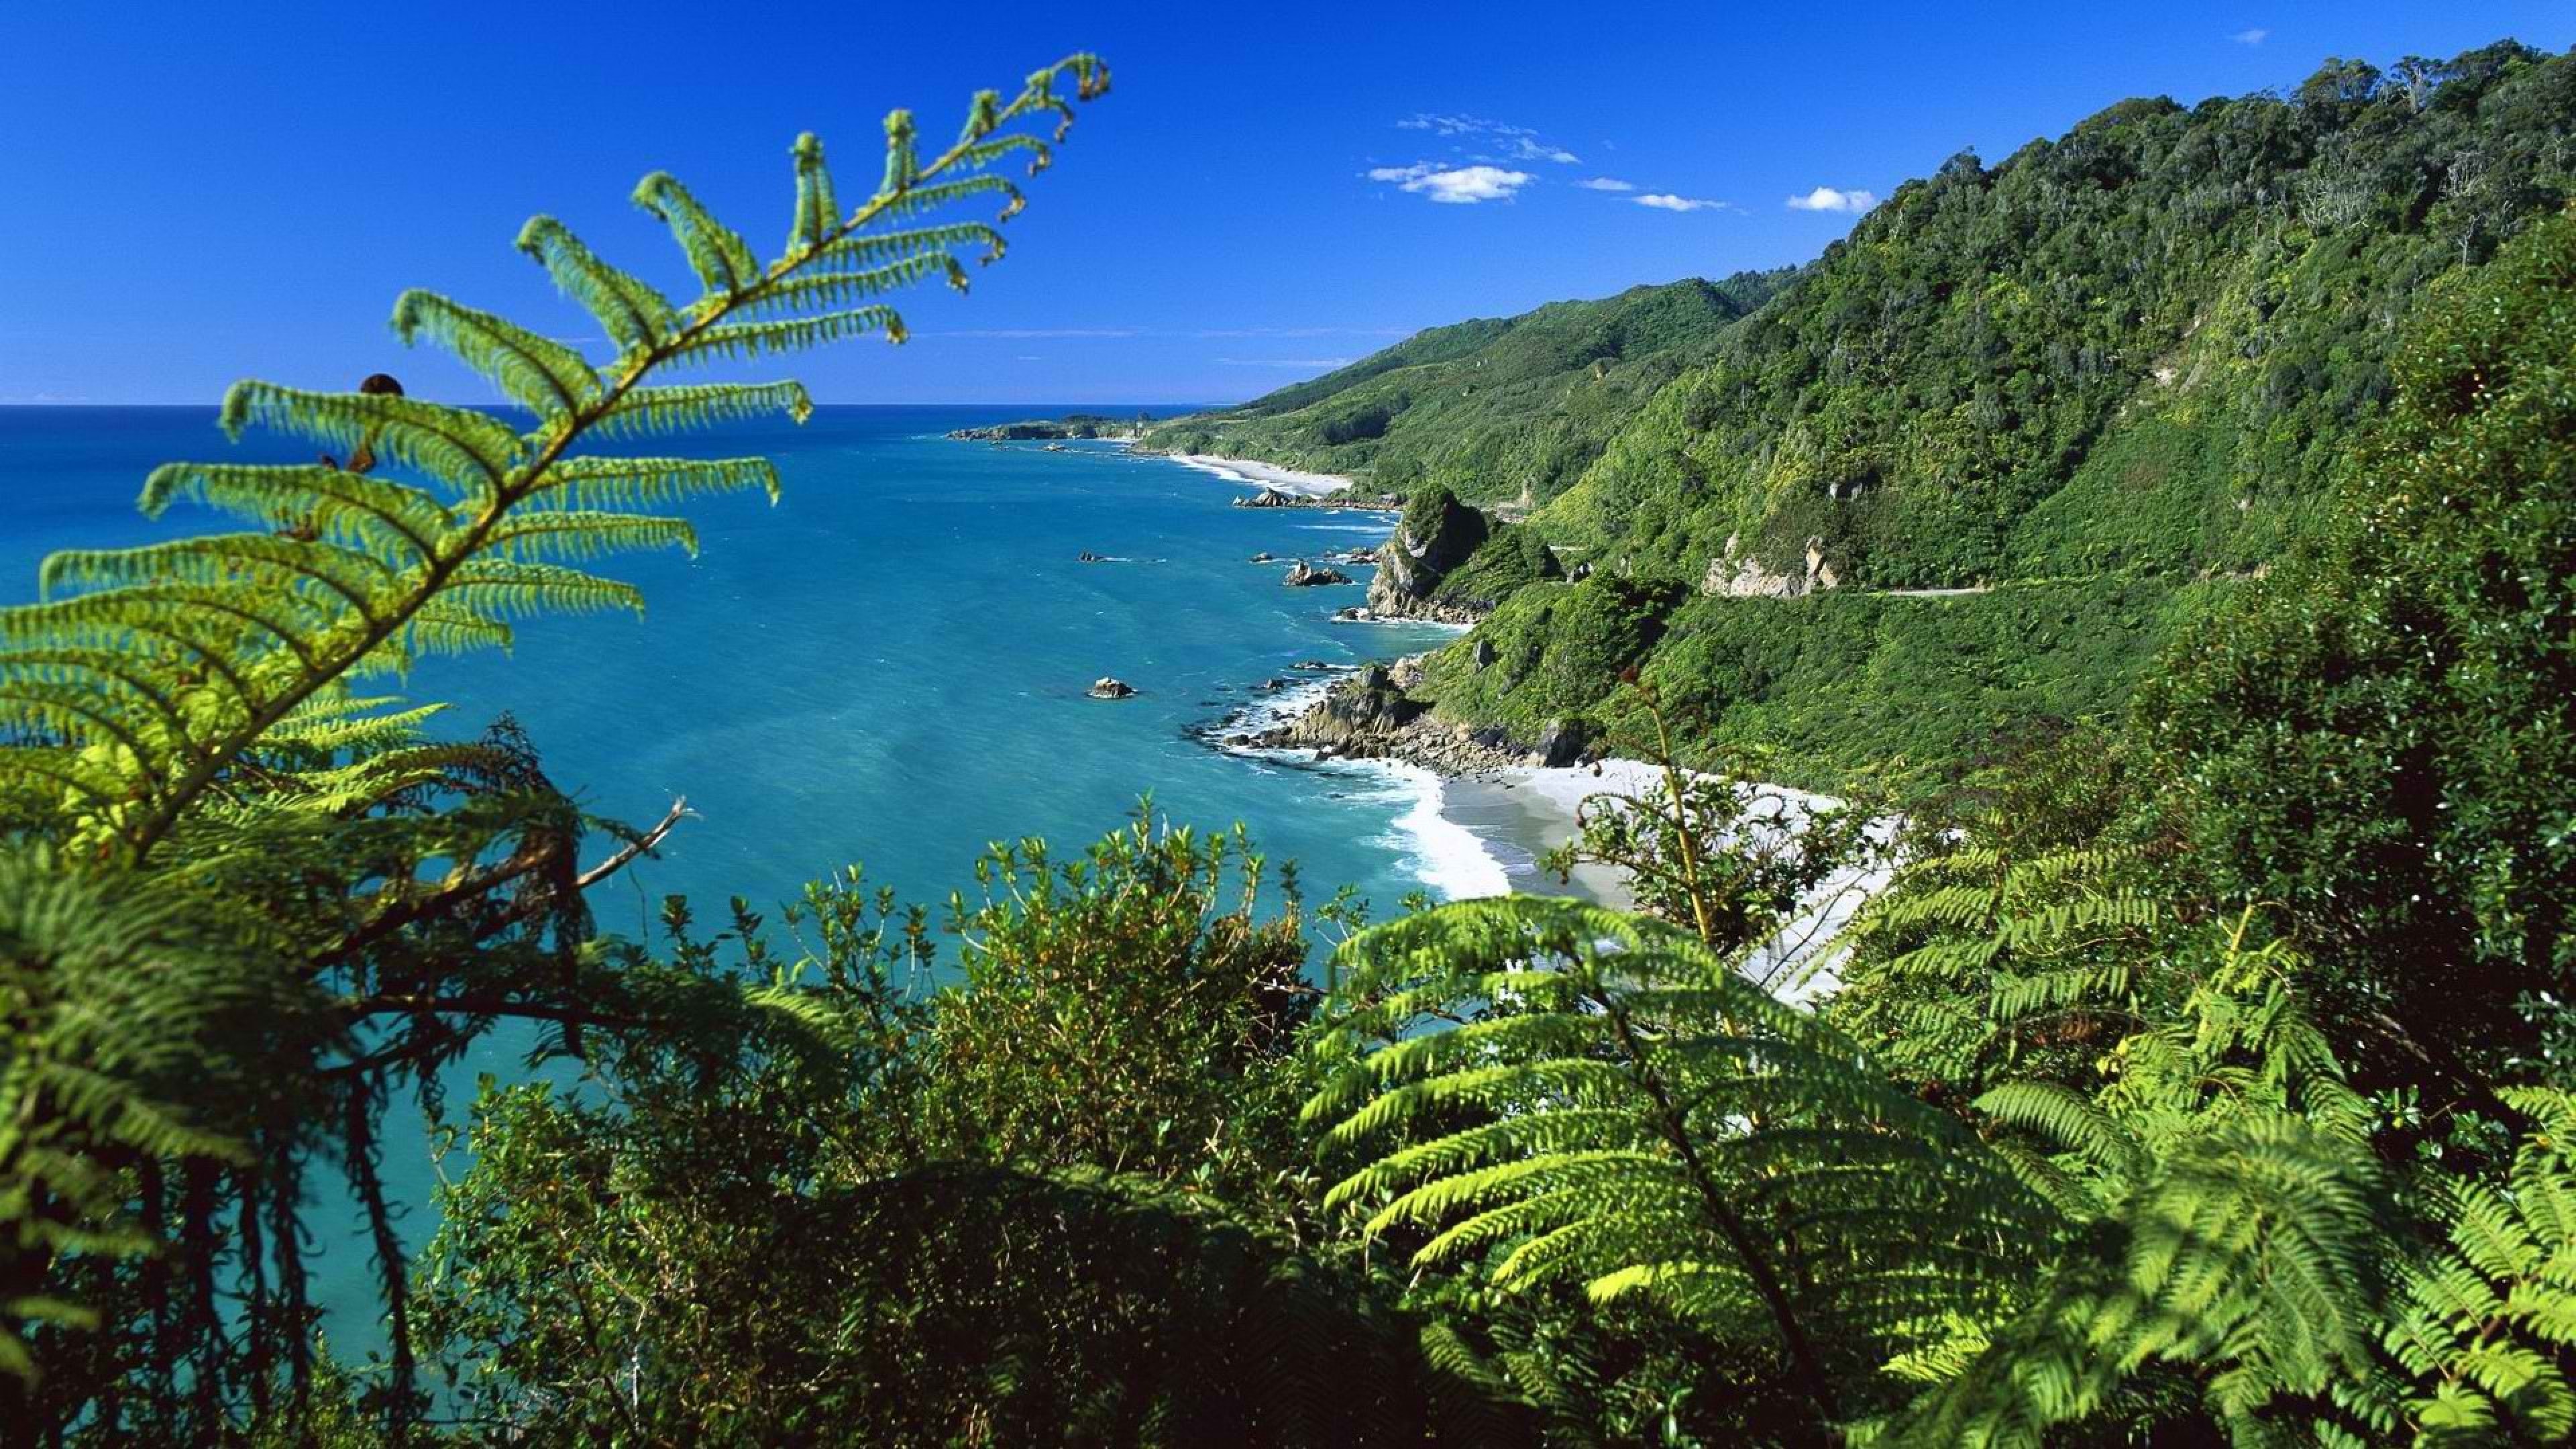 New zealand where. Национальный парк Папароа новая Зеландия. Новая Зеландия (New Zealand). Новая Зеландия Южный остров. Новая Зеландия природа Окланд.